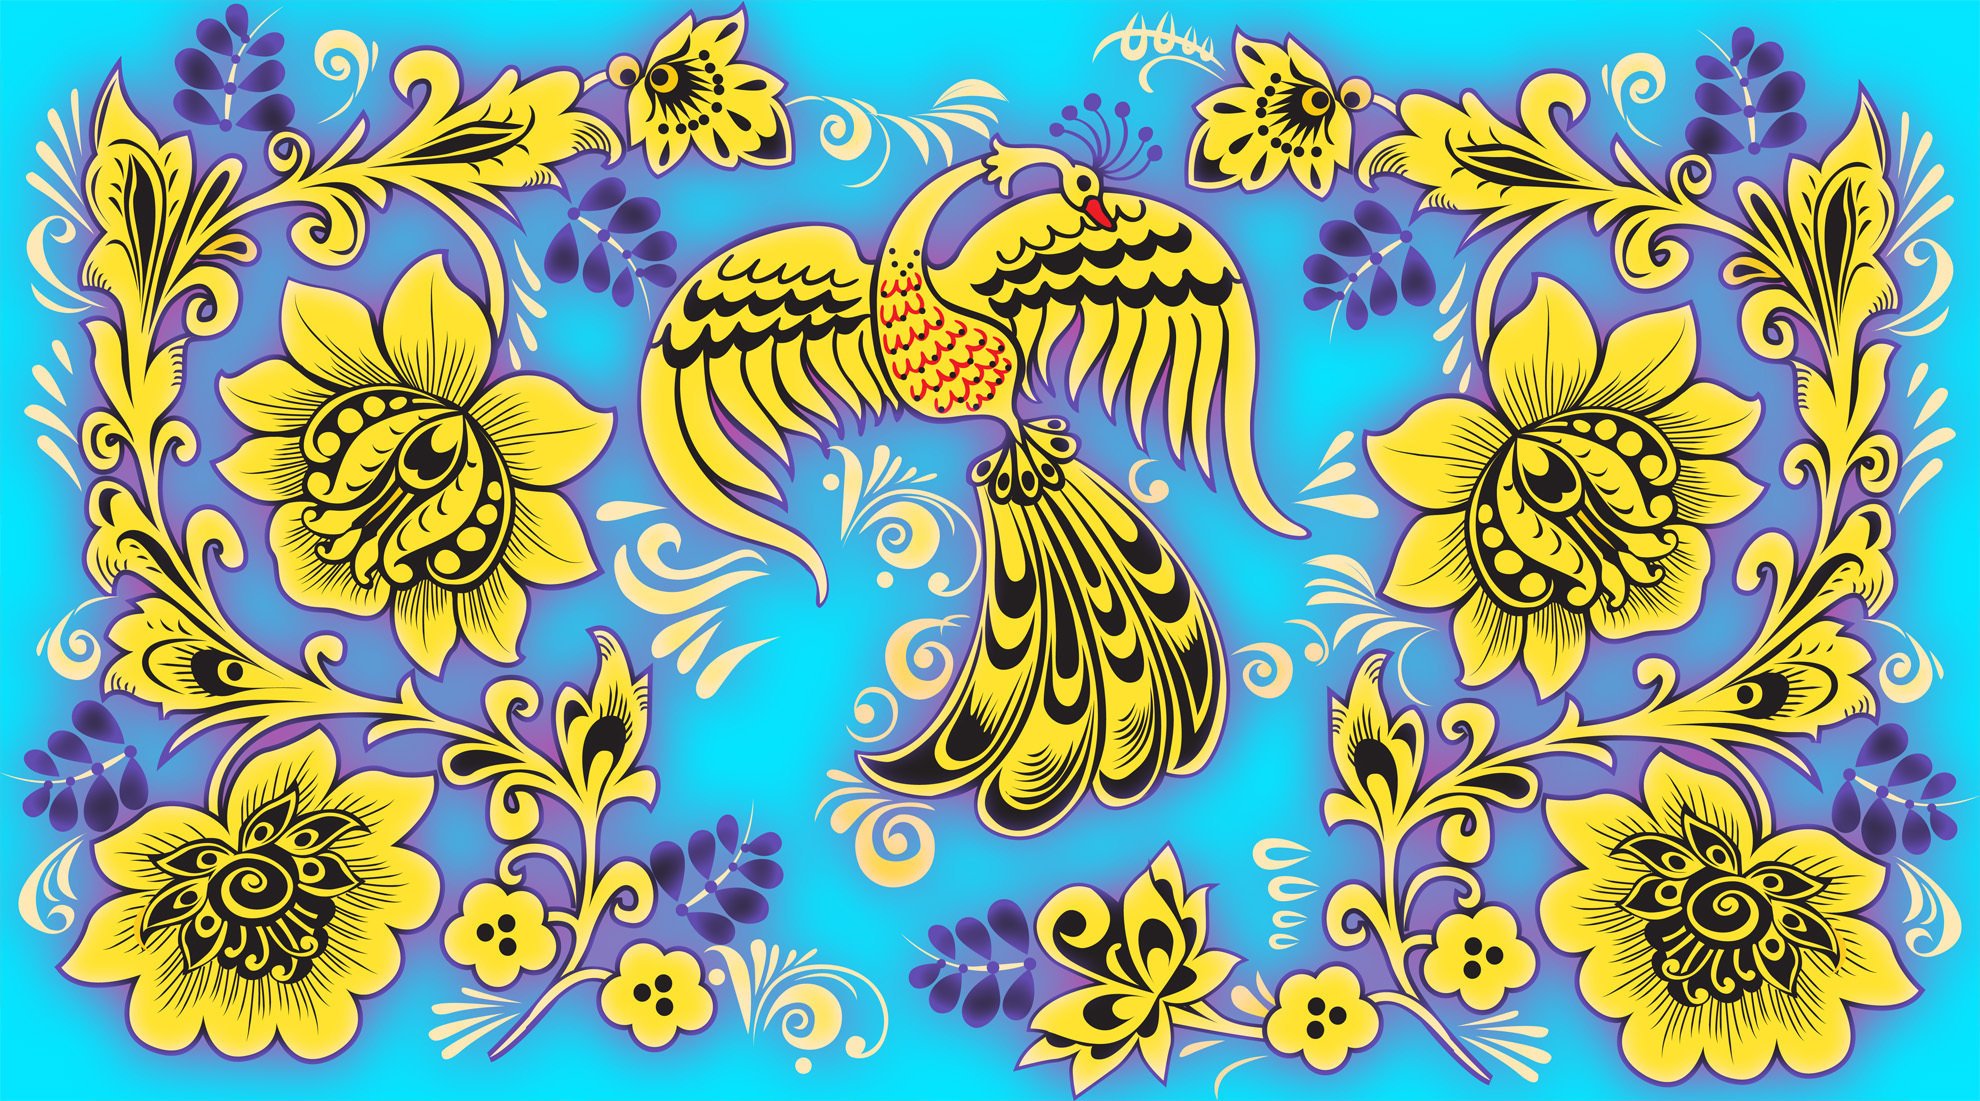 Жар птица в жёлтом цвете на голубом фоне